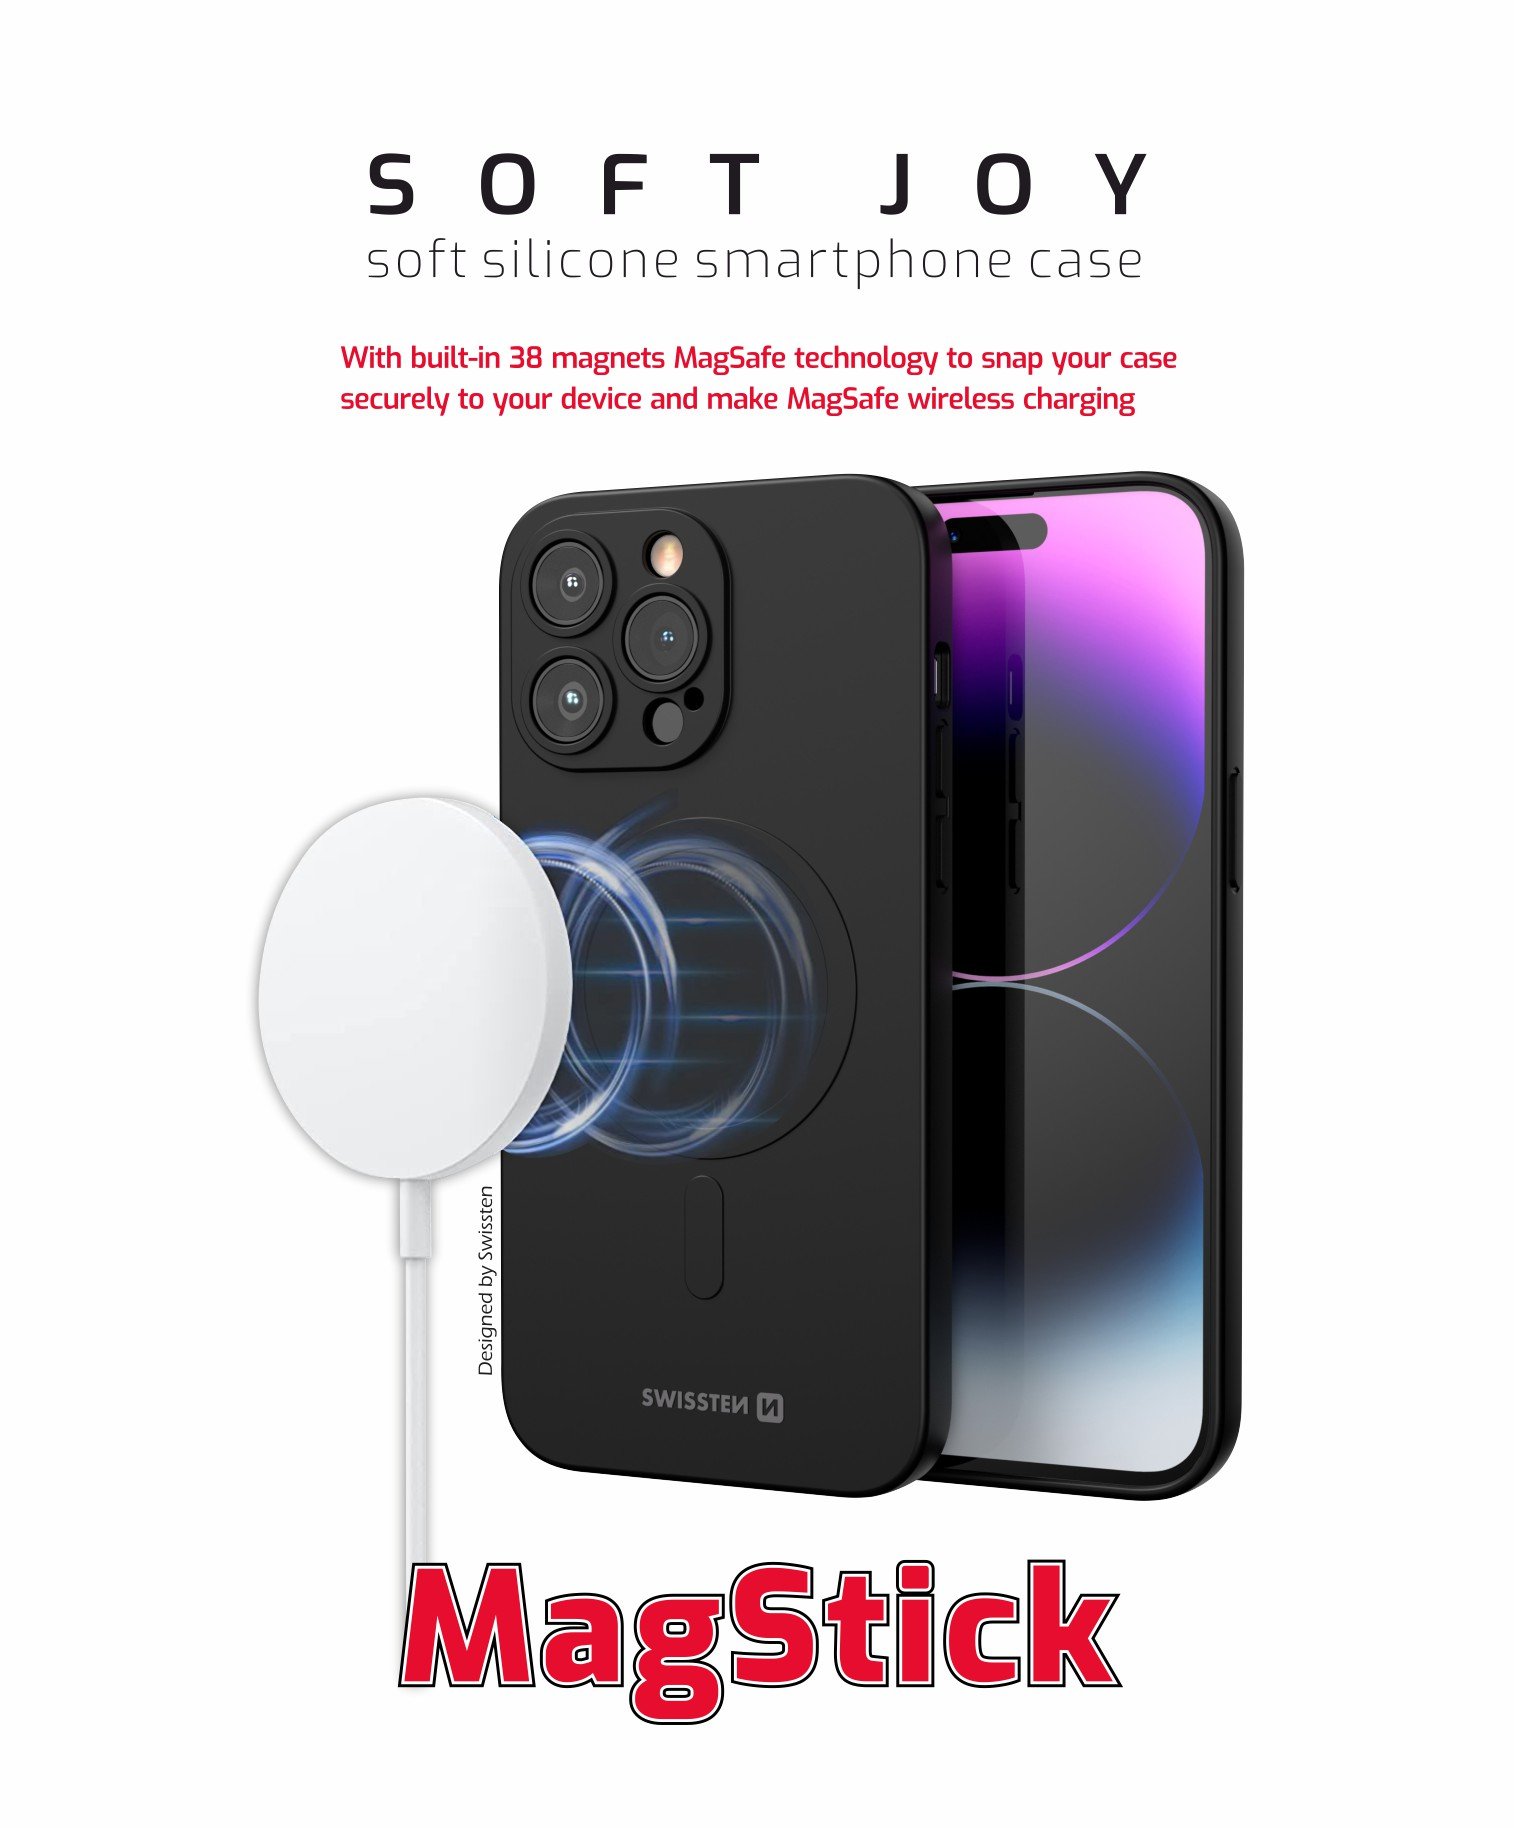 Swissten iPhone 12 Mini Soft Joy Magstick Case - 35500103 - For Magsafe Charging - Black